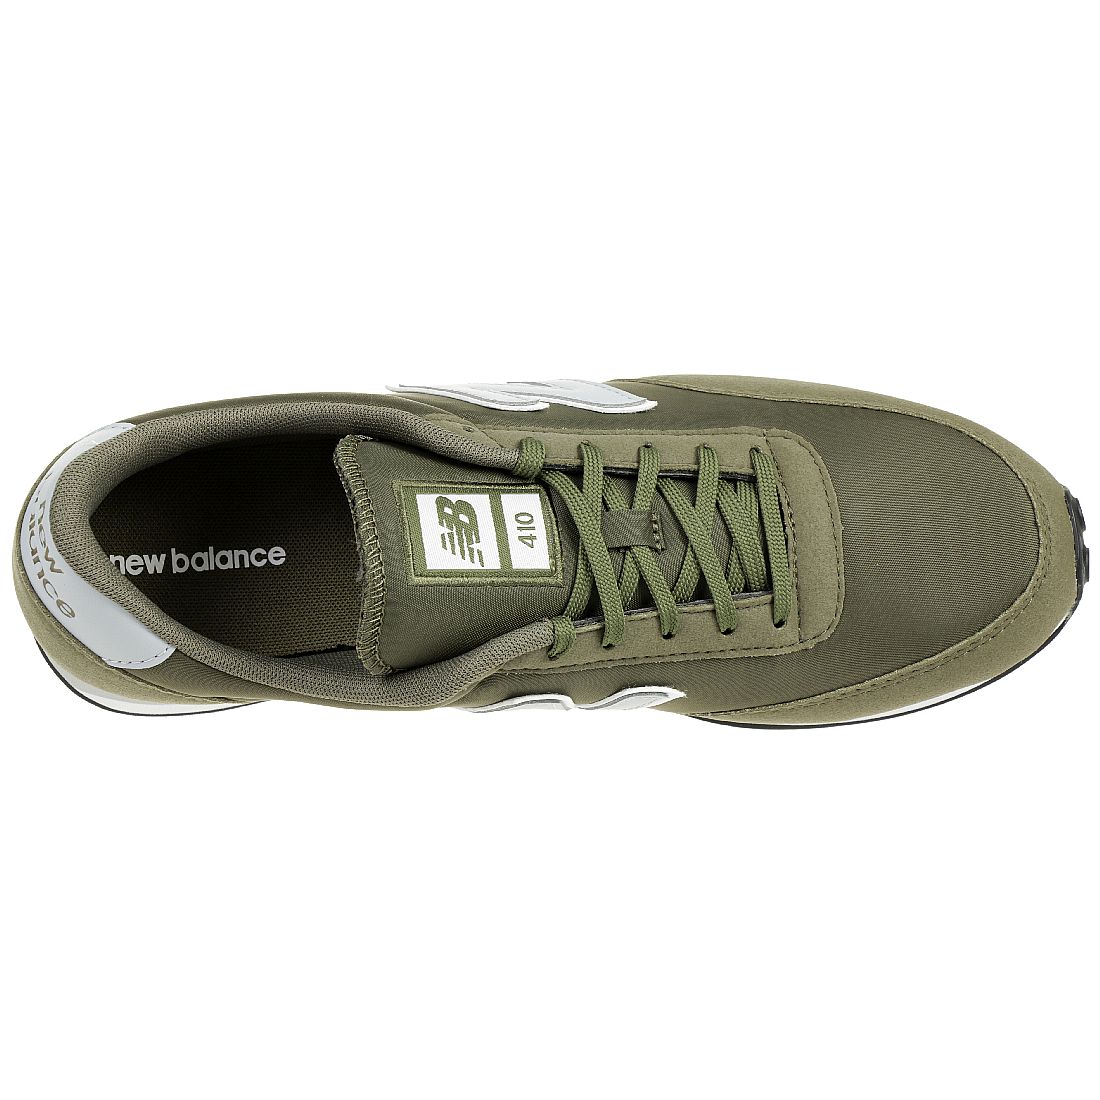 New Balance U410 OLG Sneaker Unisex Schuhe TURNSCHUHE olive